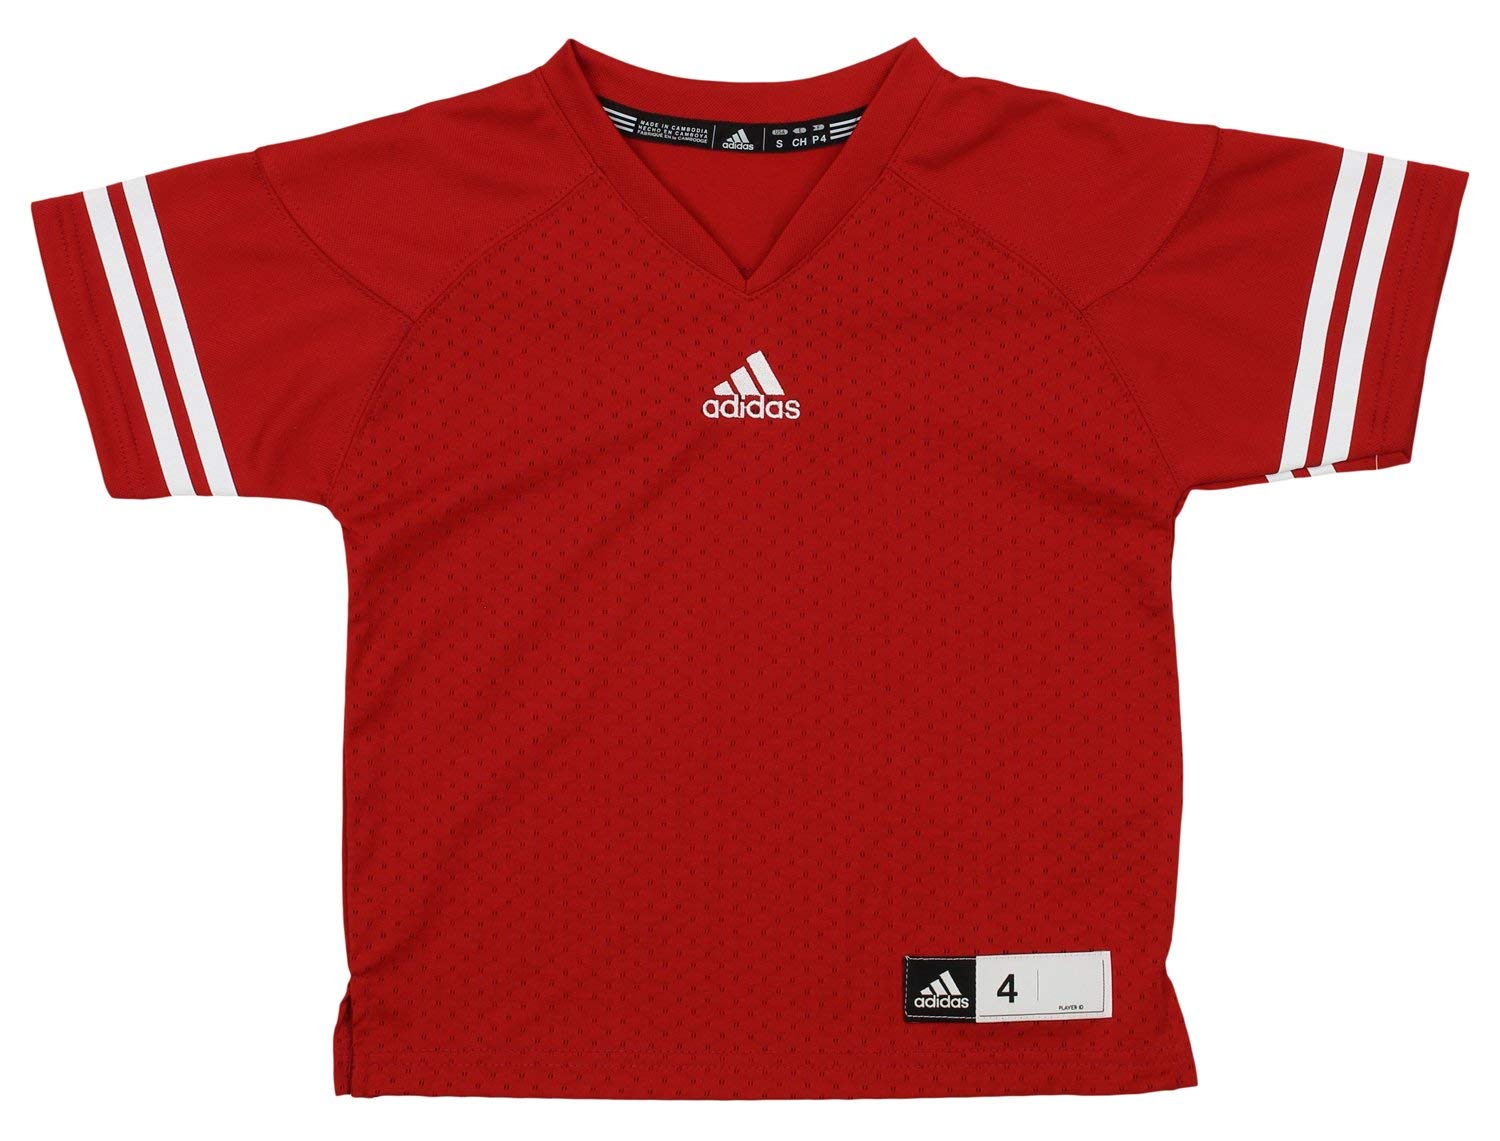 Adidas NCAA Kids Wisconsin Badgers Team Replica Jersey, Red | eBay